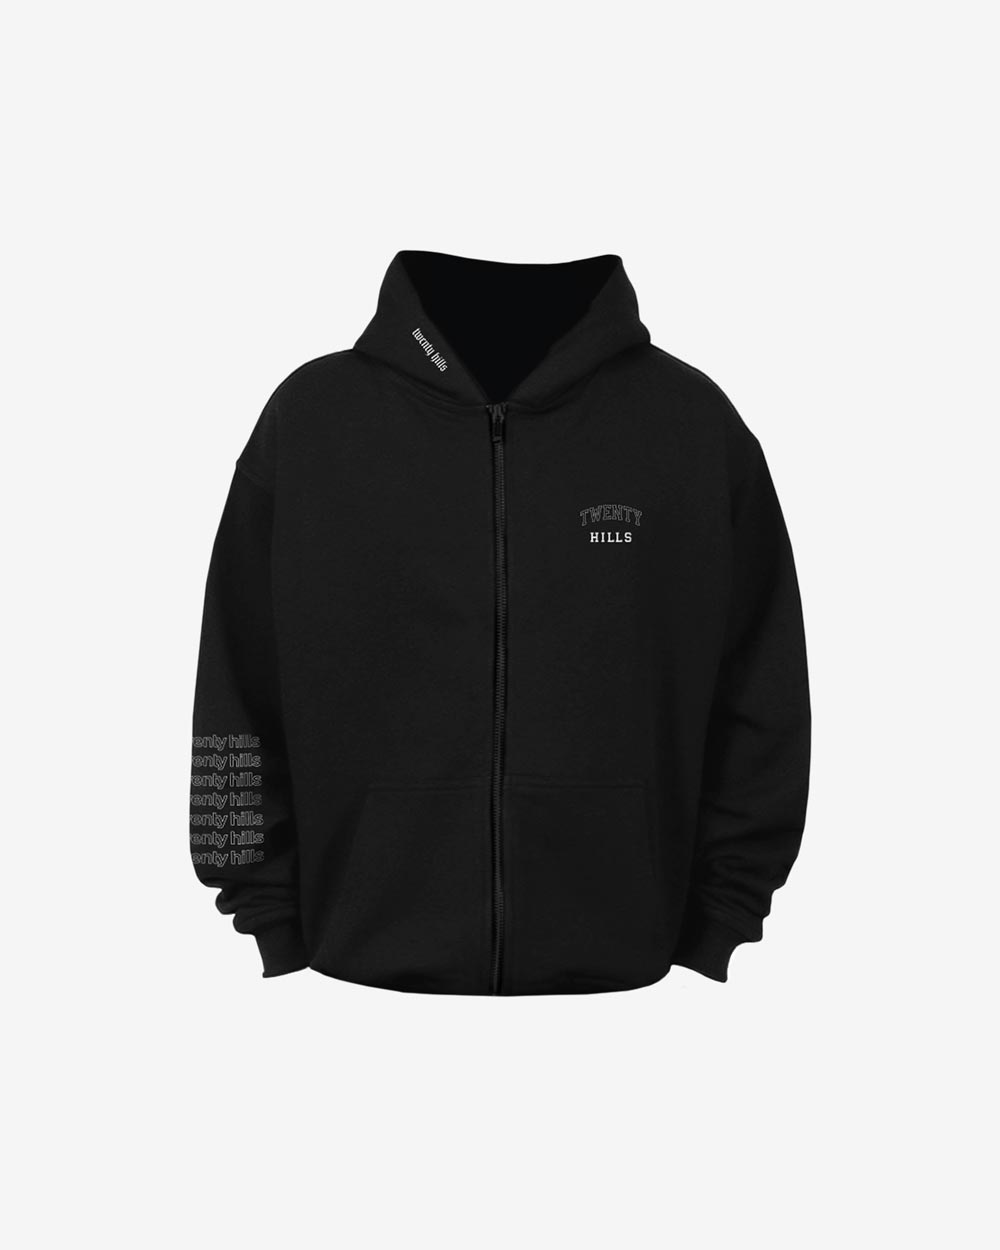 Unisex Zip Jacket Hooded